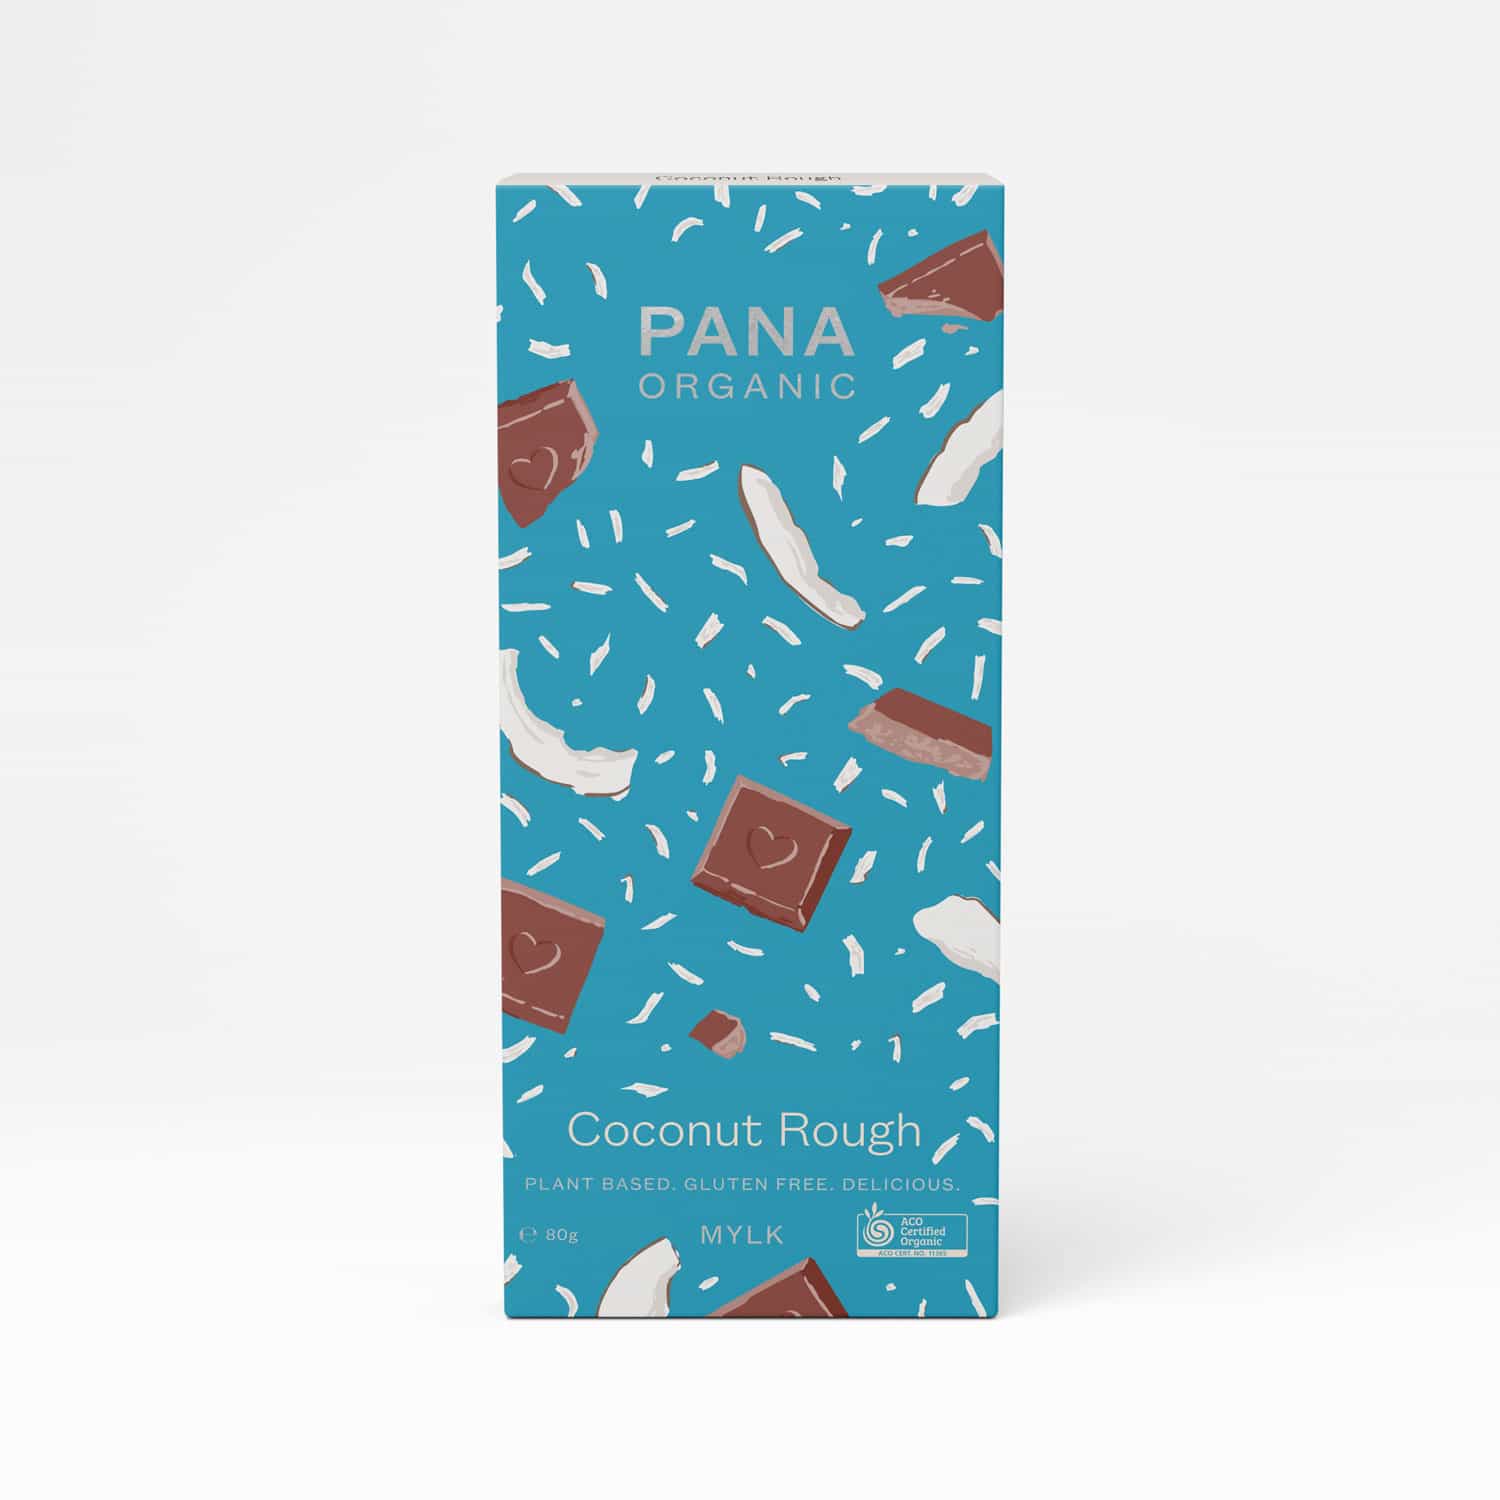 Pana Organic Mylk Coconut Rough Chocolate | 80g $3.50(was $7) at Coles